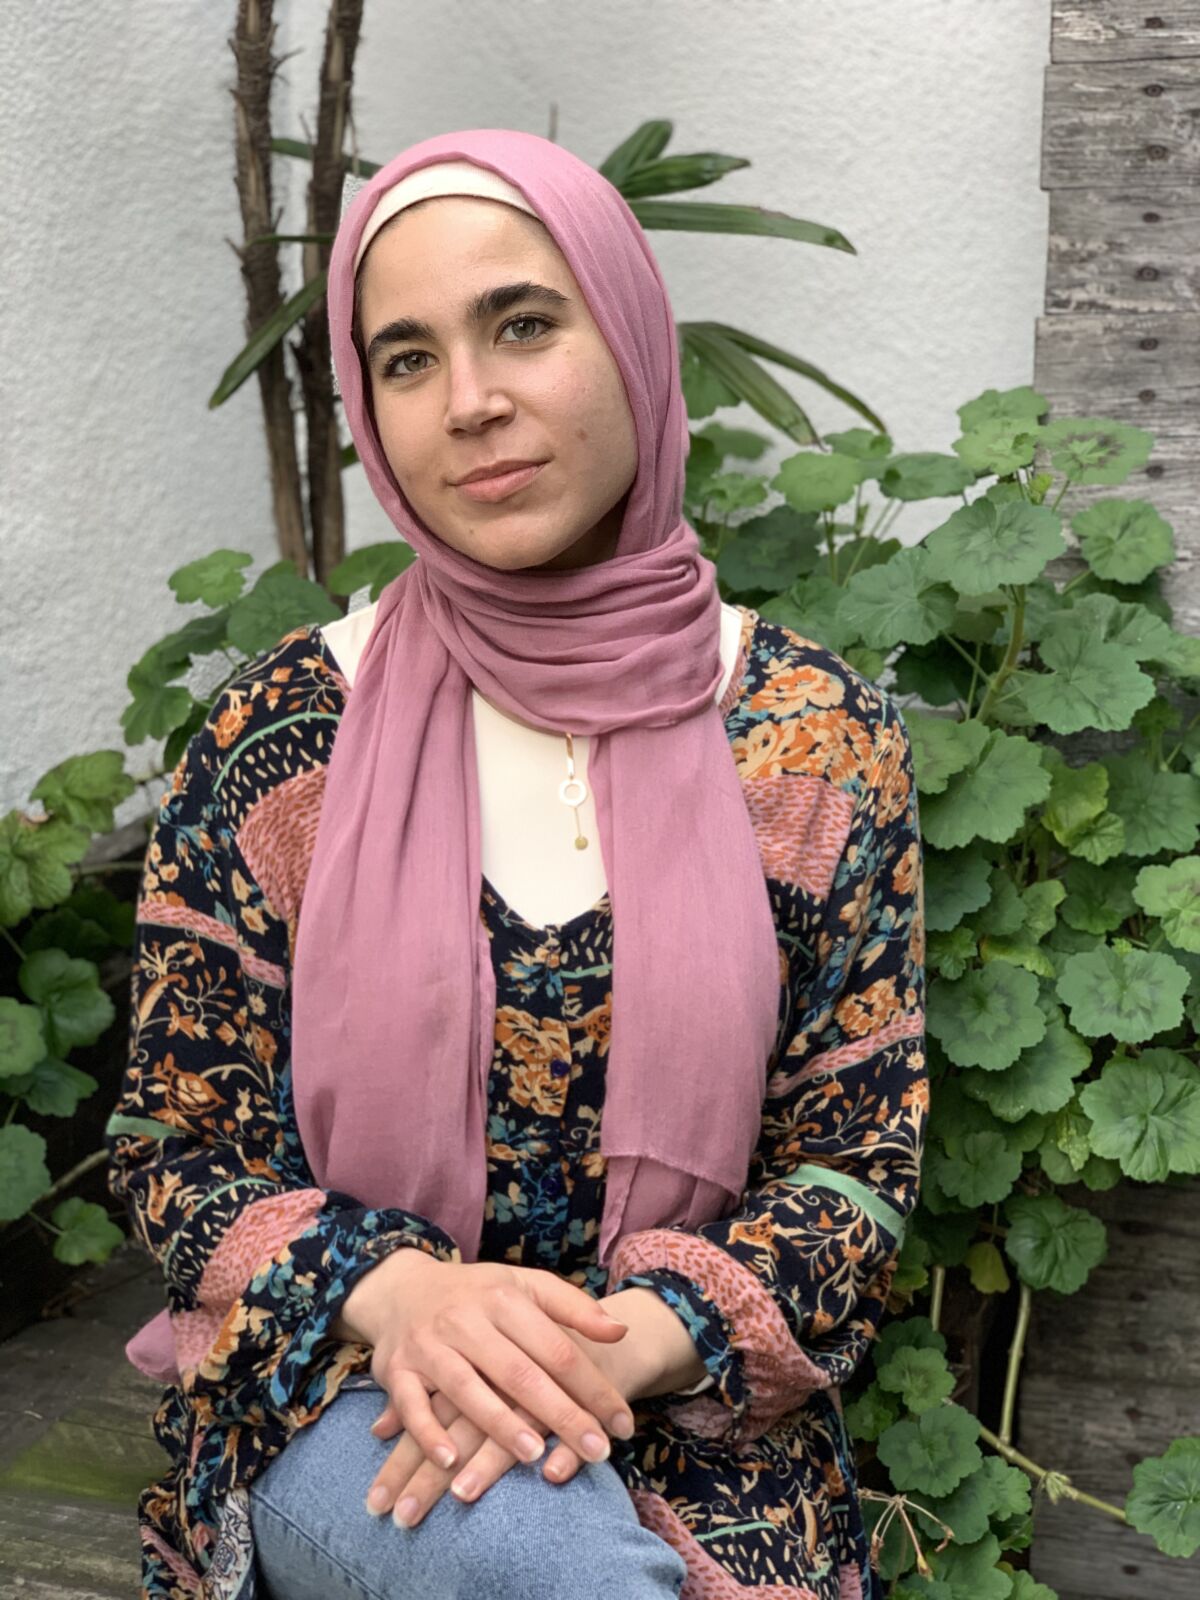 Sarah Kouzi aims to dispel stigma about mental health in my Arab and Muslim communities.